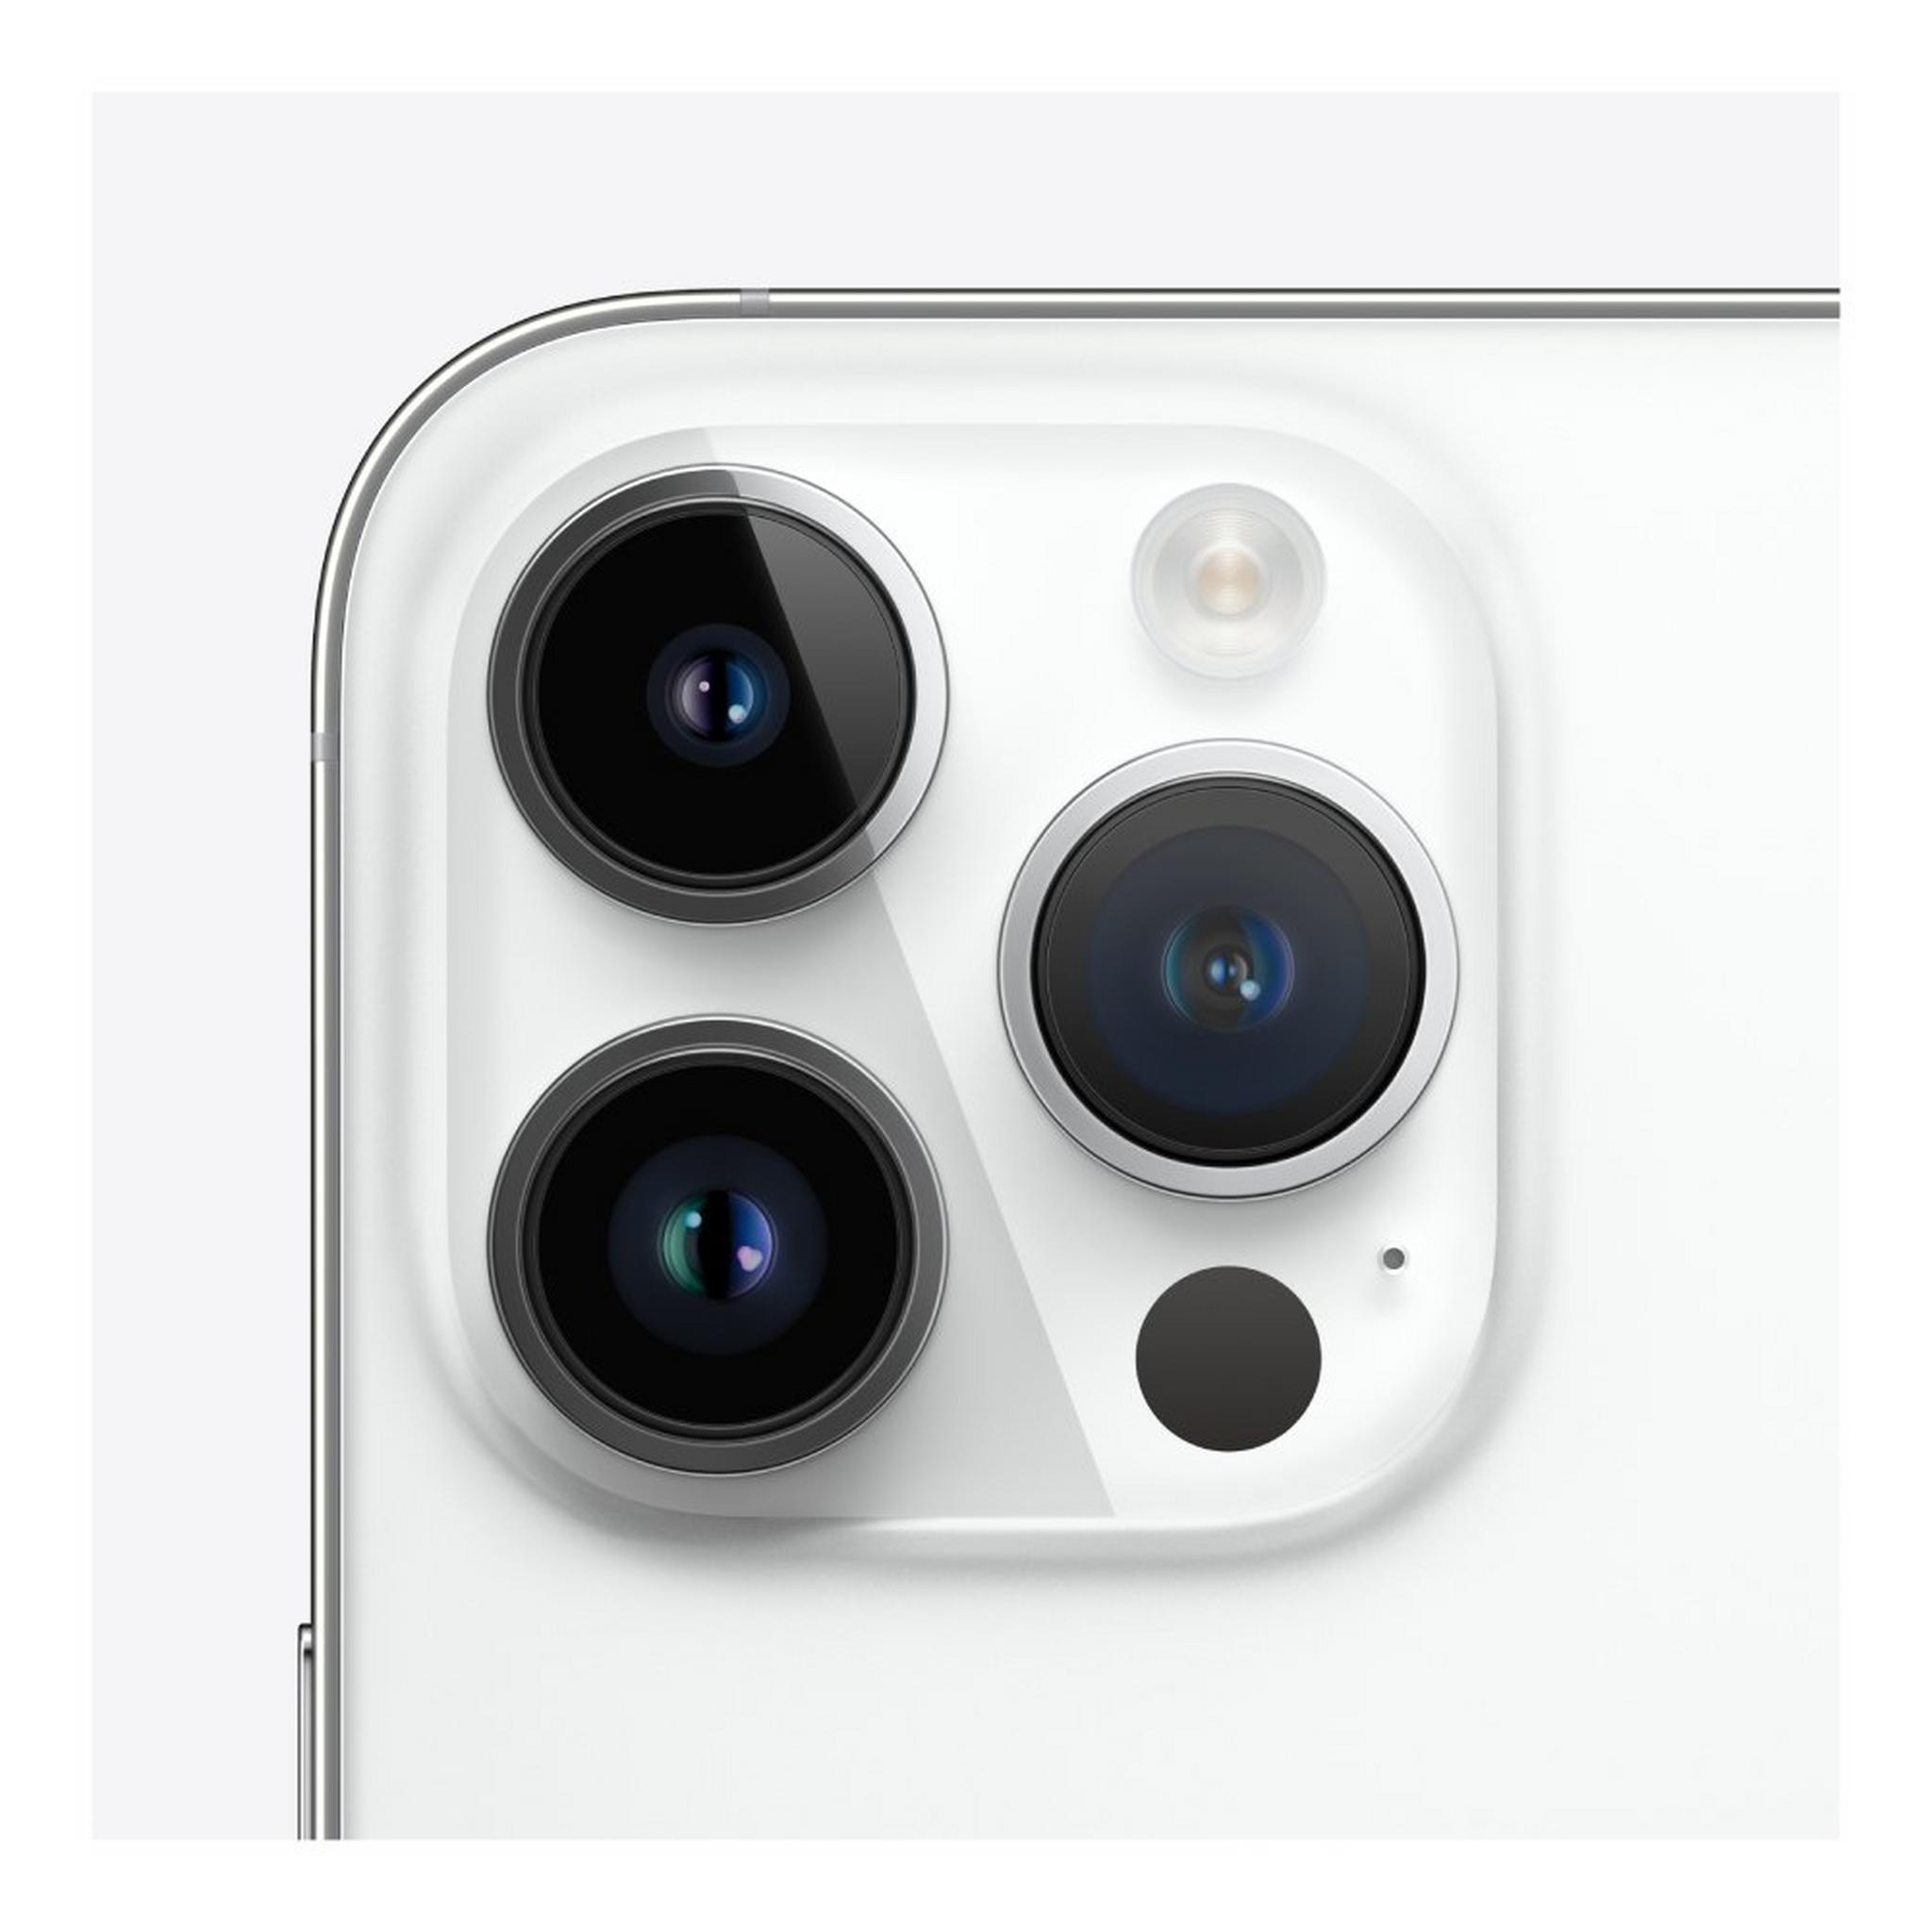 Apple iPhone 14 Pro Max 5G 256GB - Silver